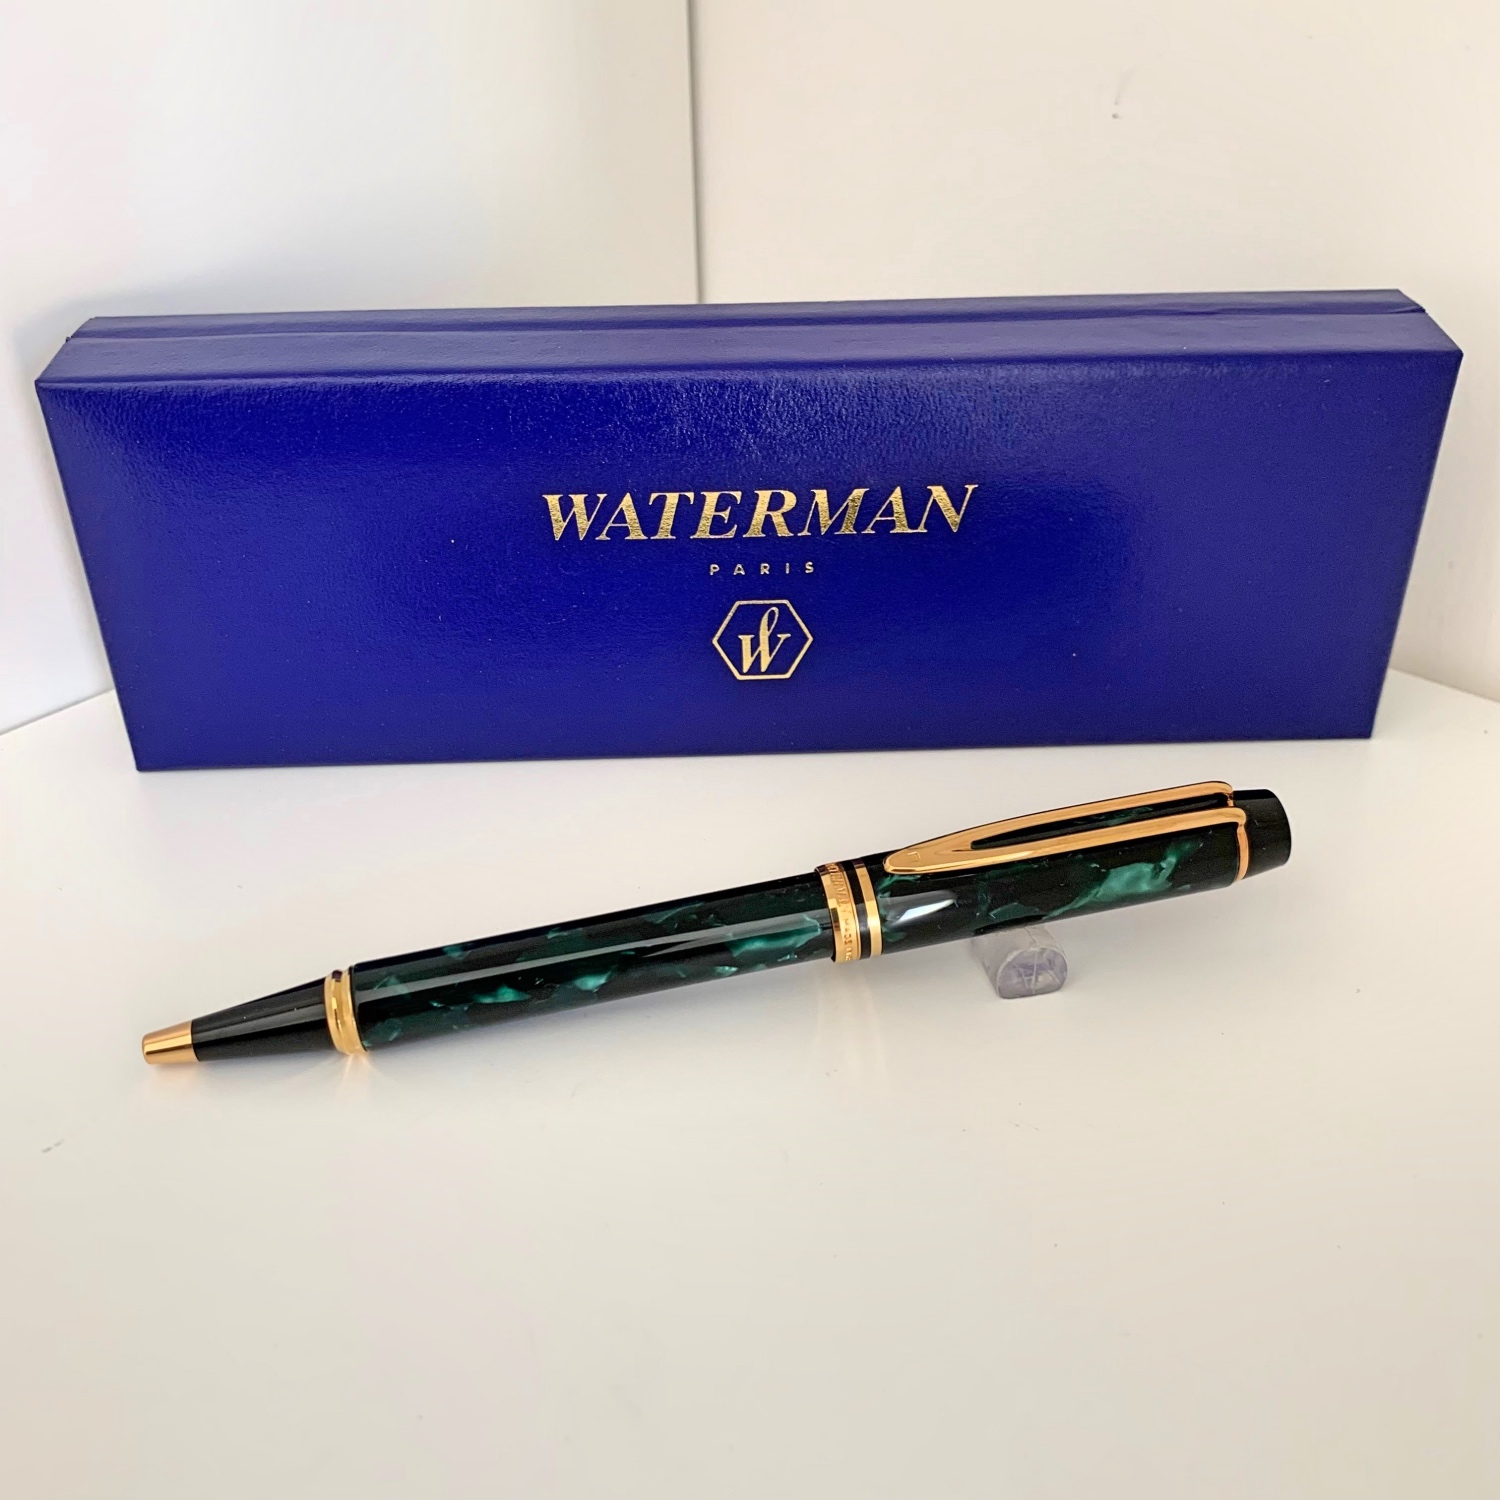 Penna a Sfera Waterman Man 100 Rhapsody Verde. - La Stilografica Shop